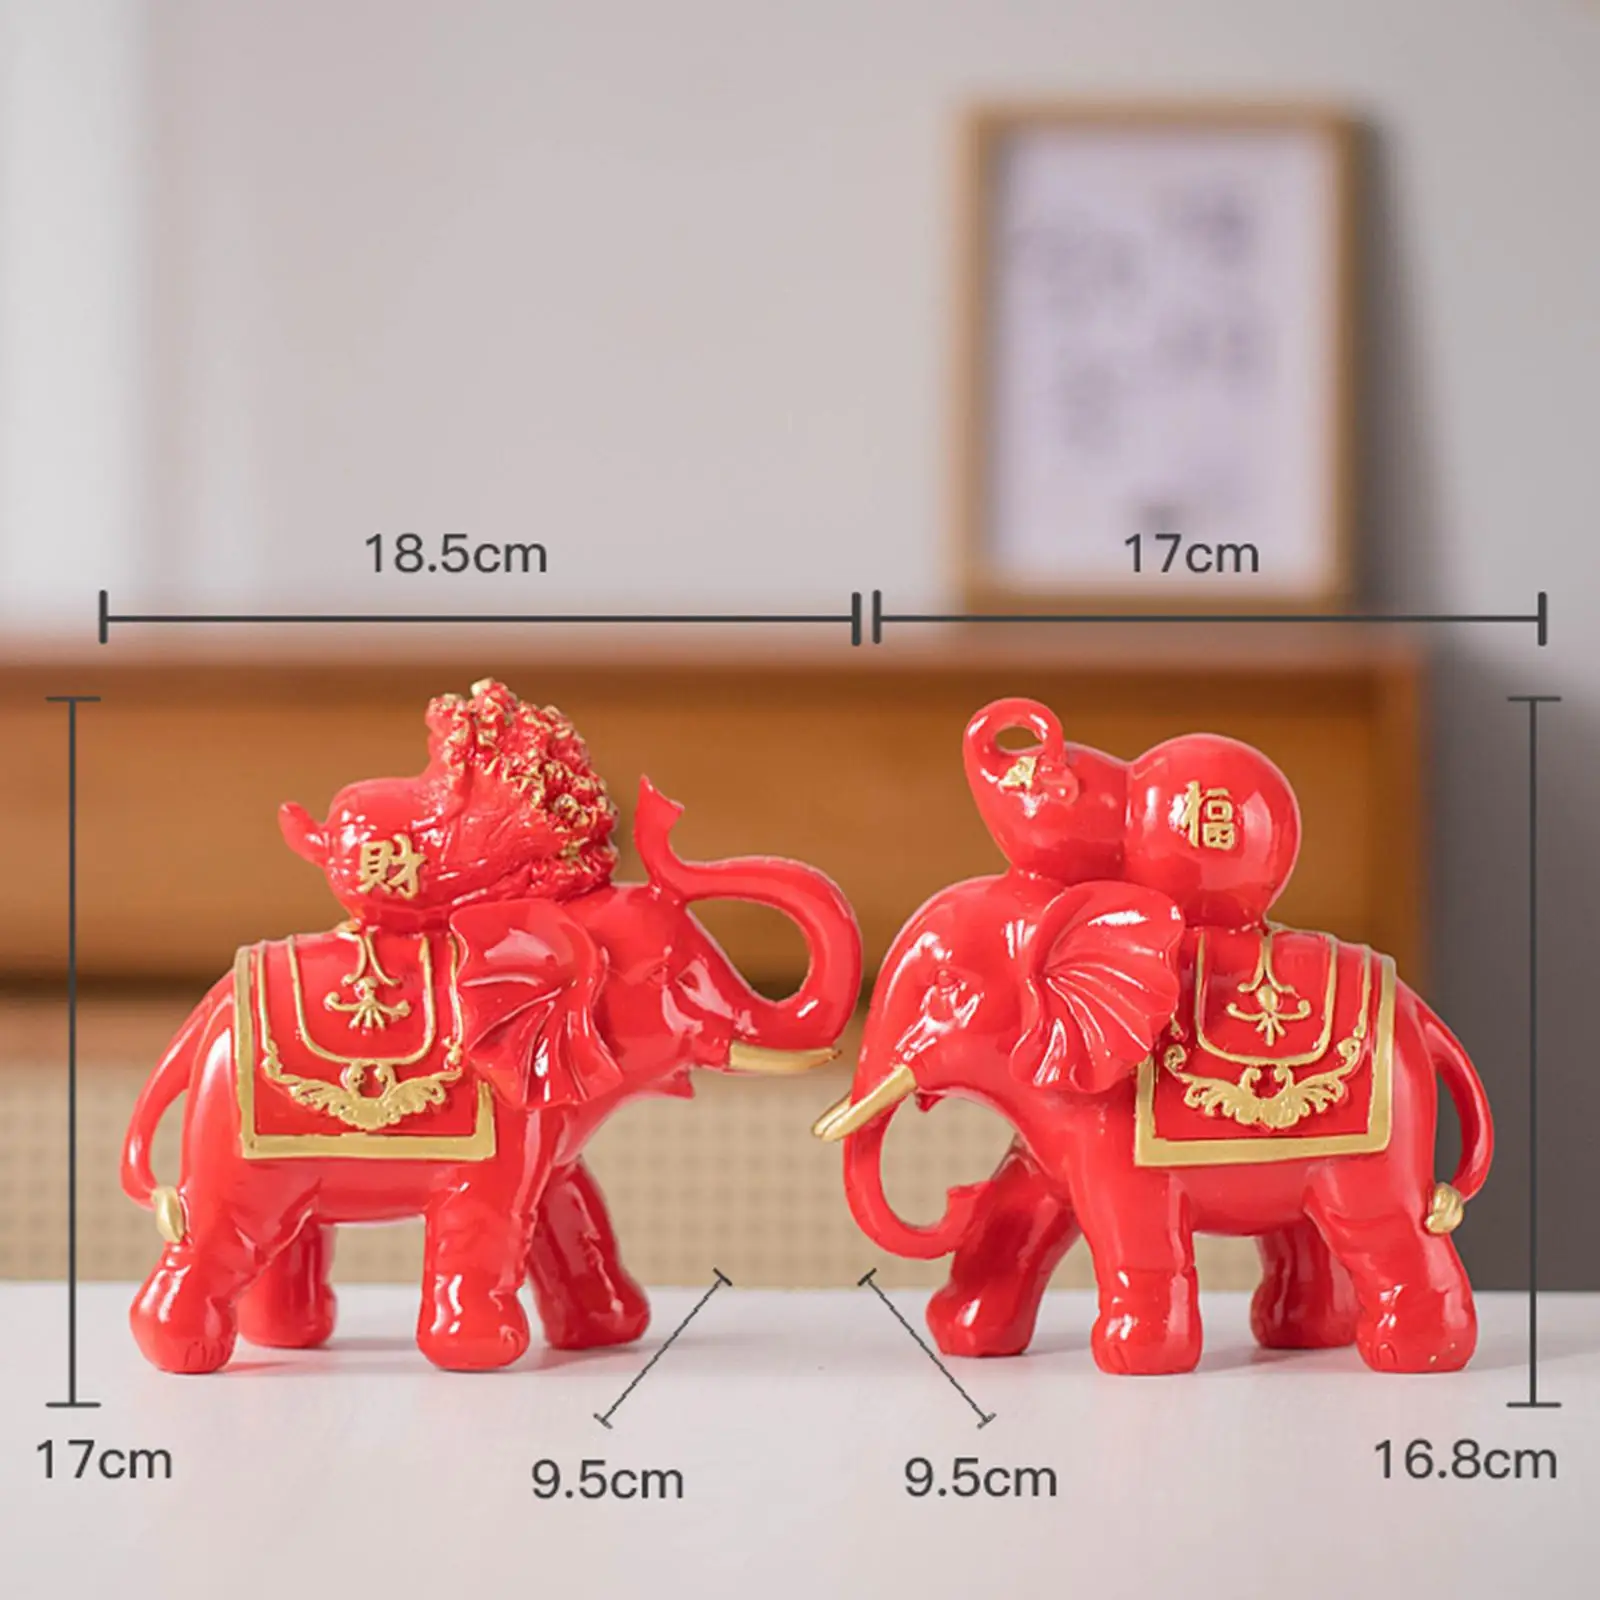 2 Pieces Elephant Statue Craft Standing Resin Home Decoration Figurine Animals Sculpture for Desktop Office Living Room Bedroom